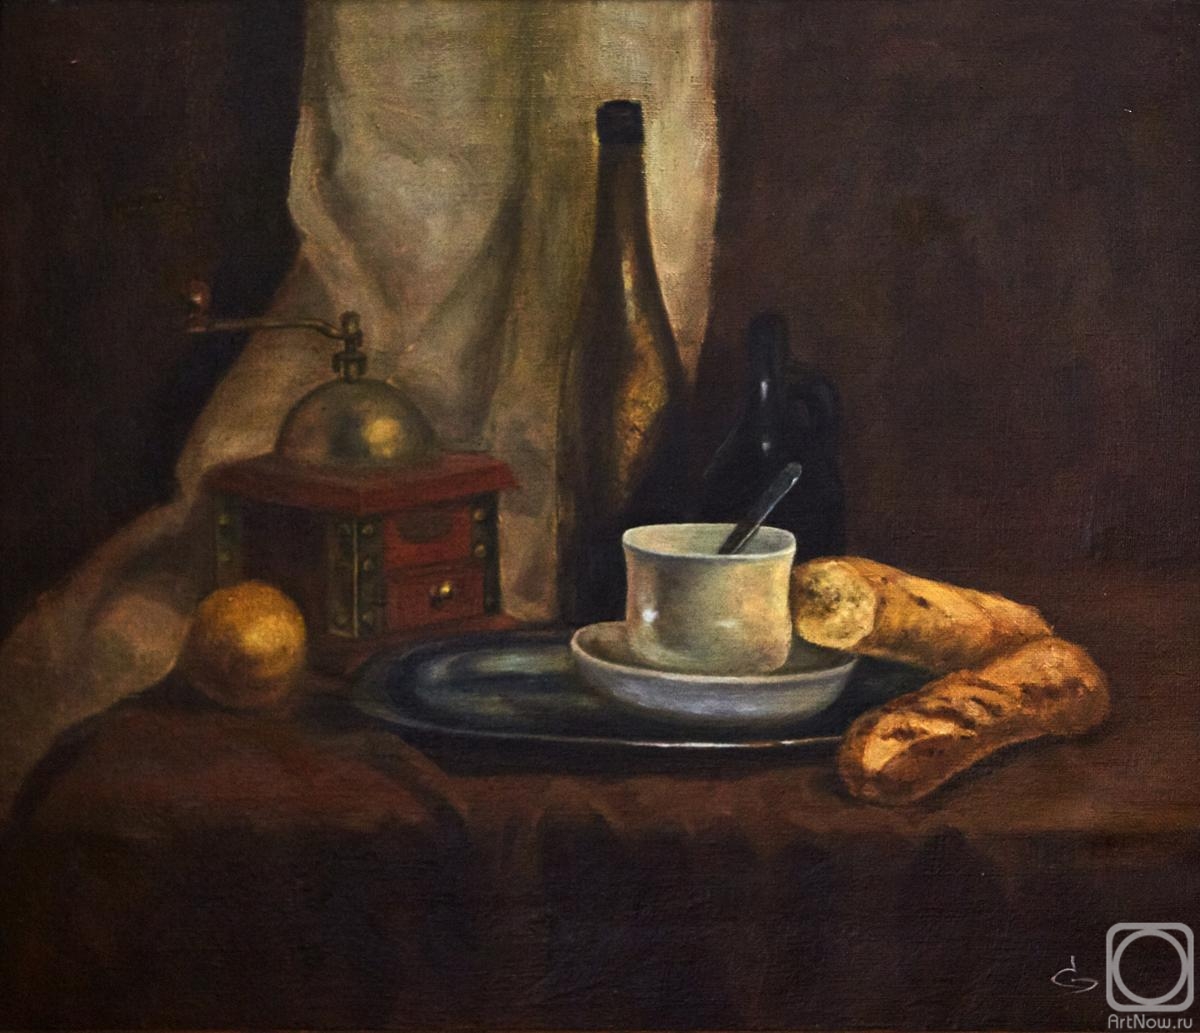 Sokolinskaya Sofya. Still life with coffee grinder